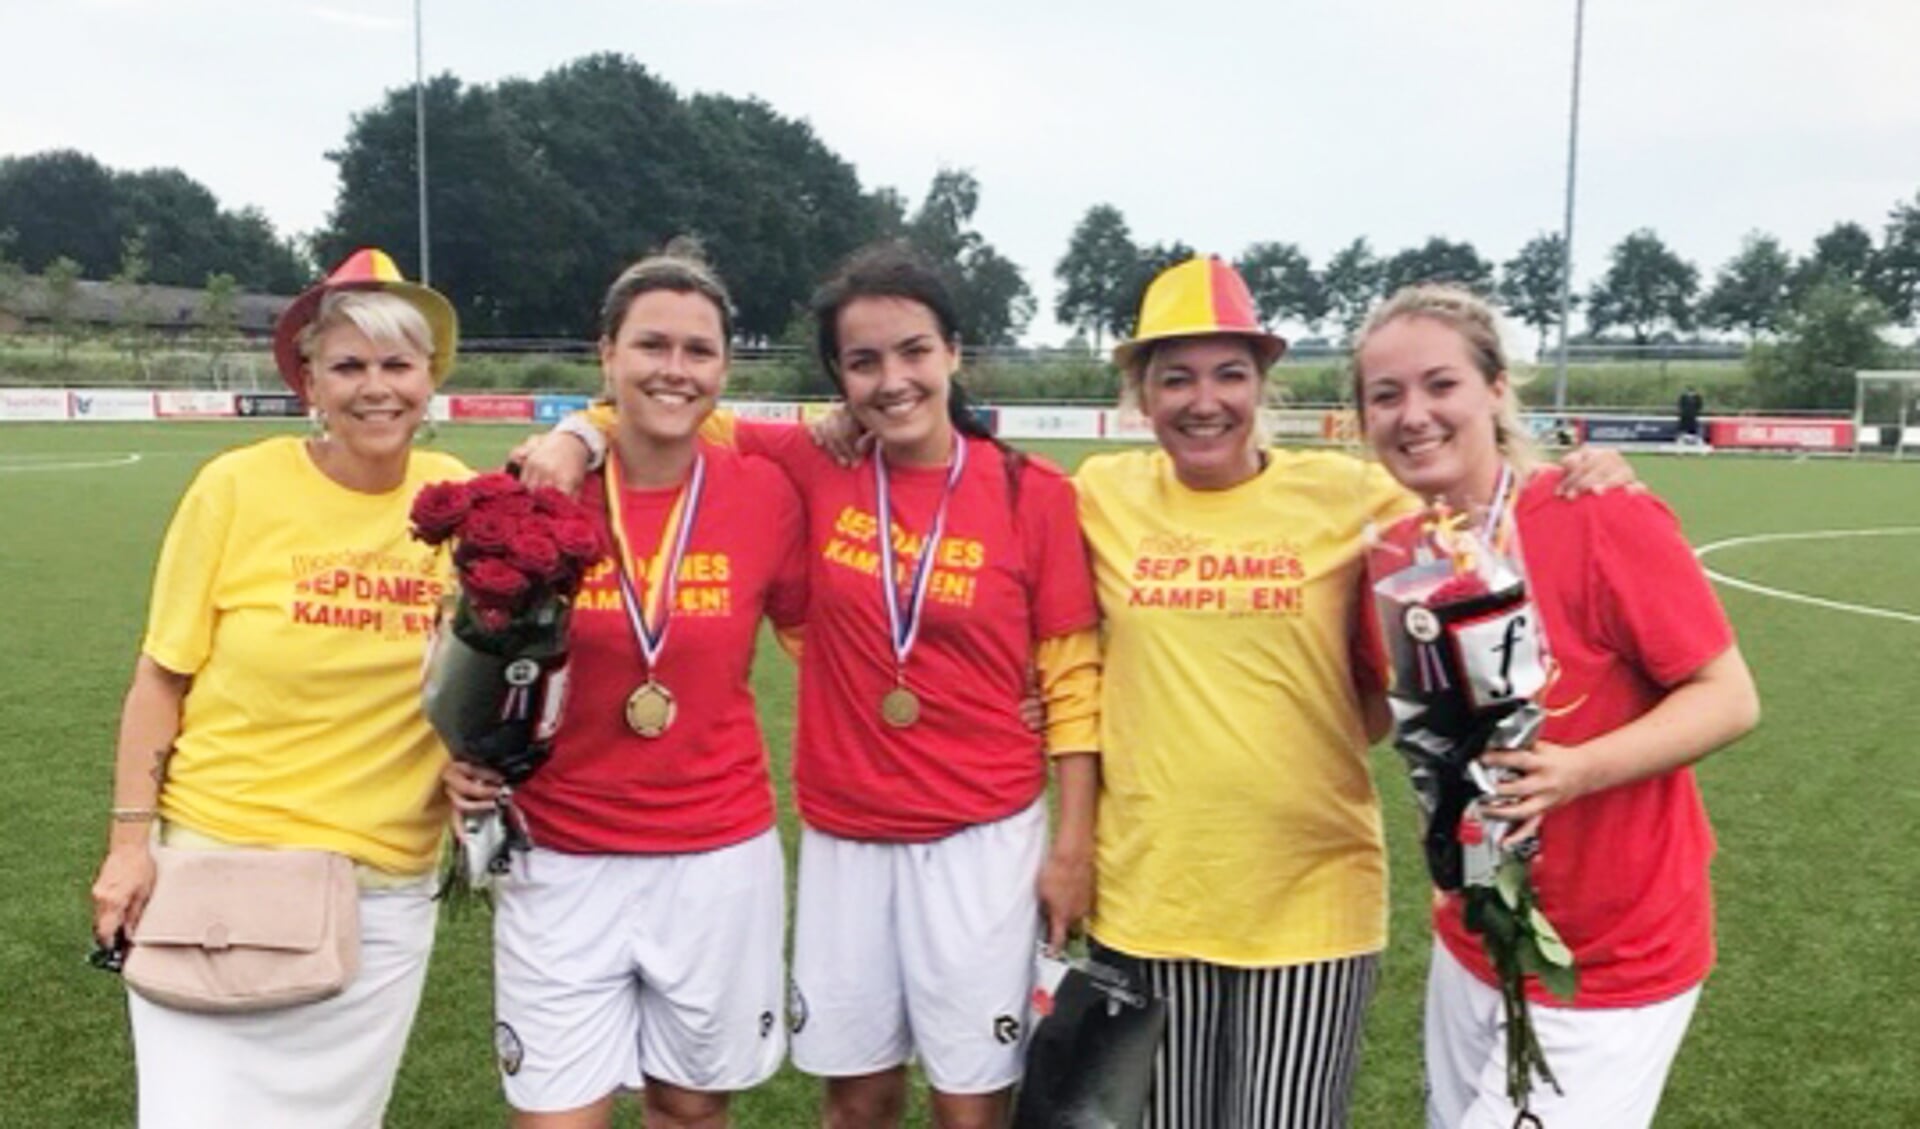 Met het eerste team is Jerina Boer onlangs kampioen geworden! vlnr: Anne Marie Boer, Jerina Boer, Nina de Letter, Nathalie de Letter, Lola de Letter.